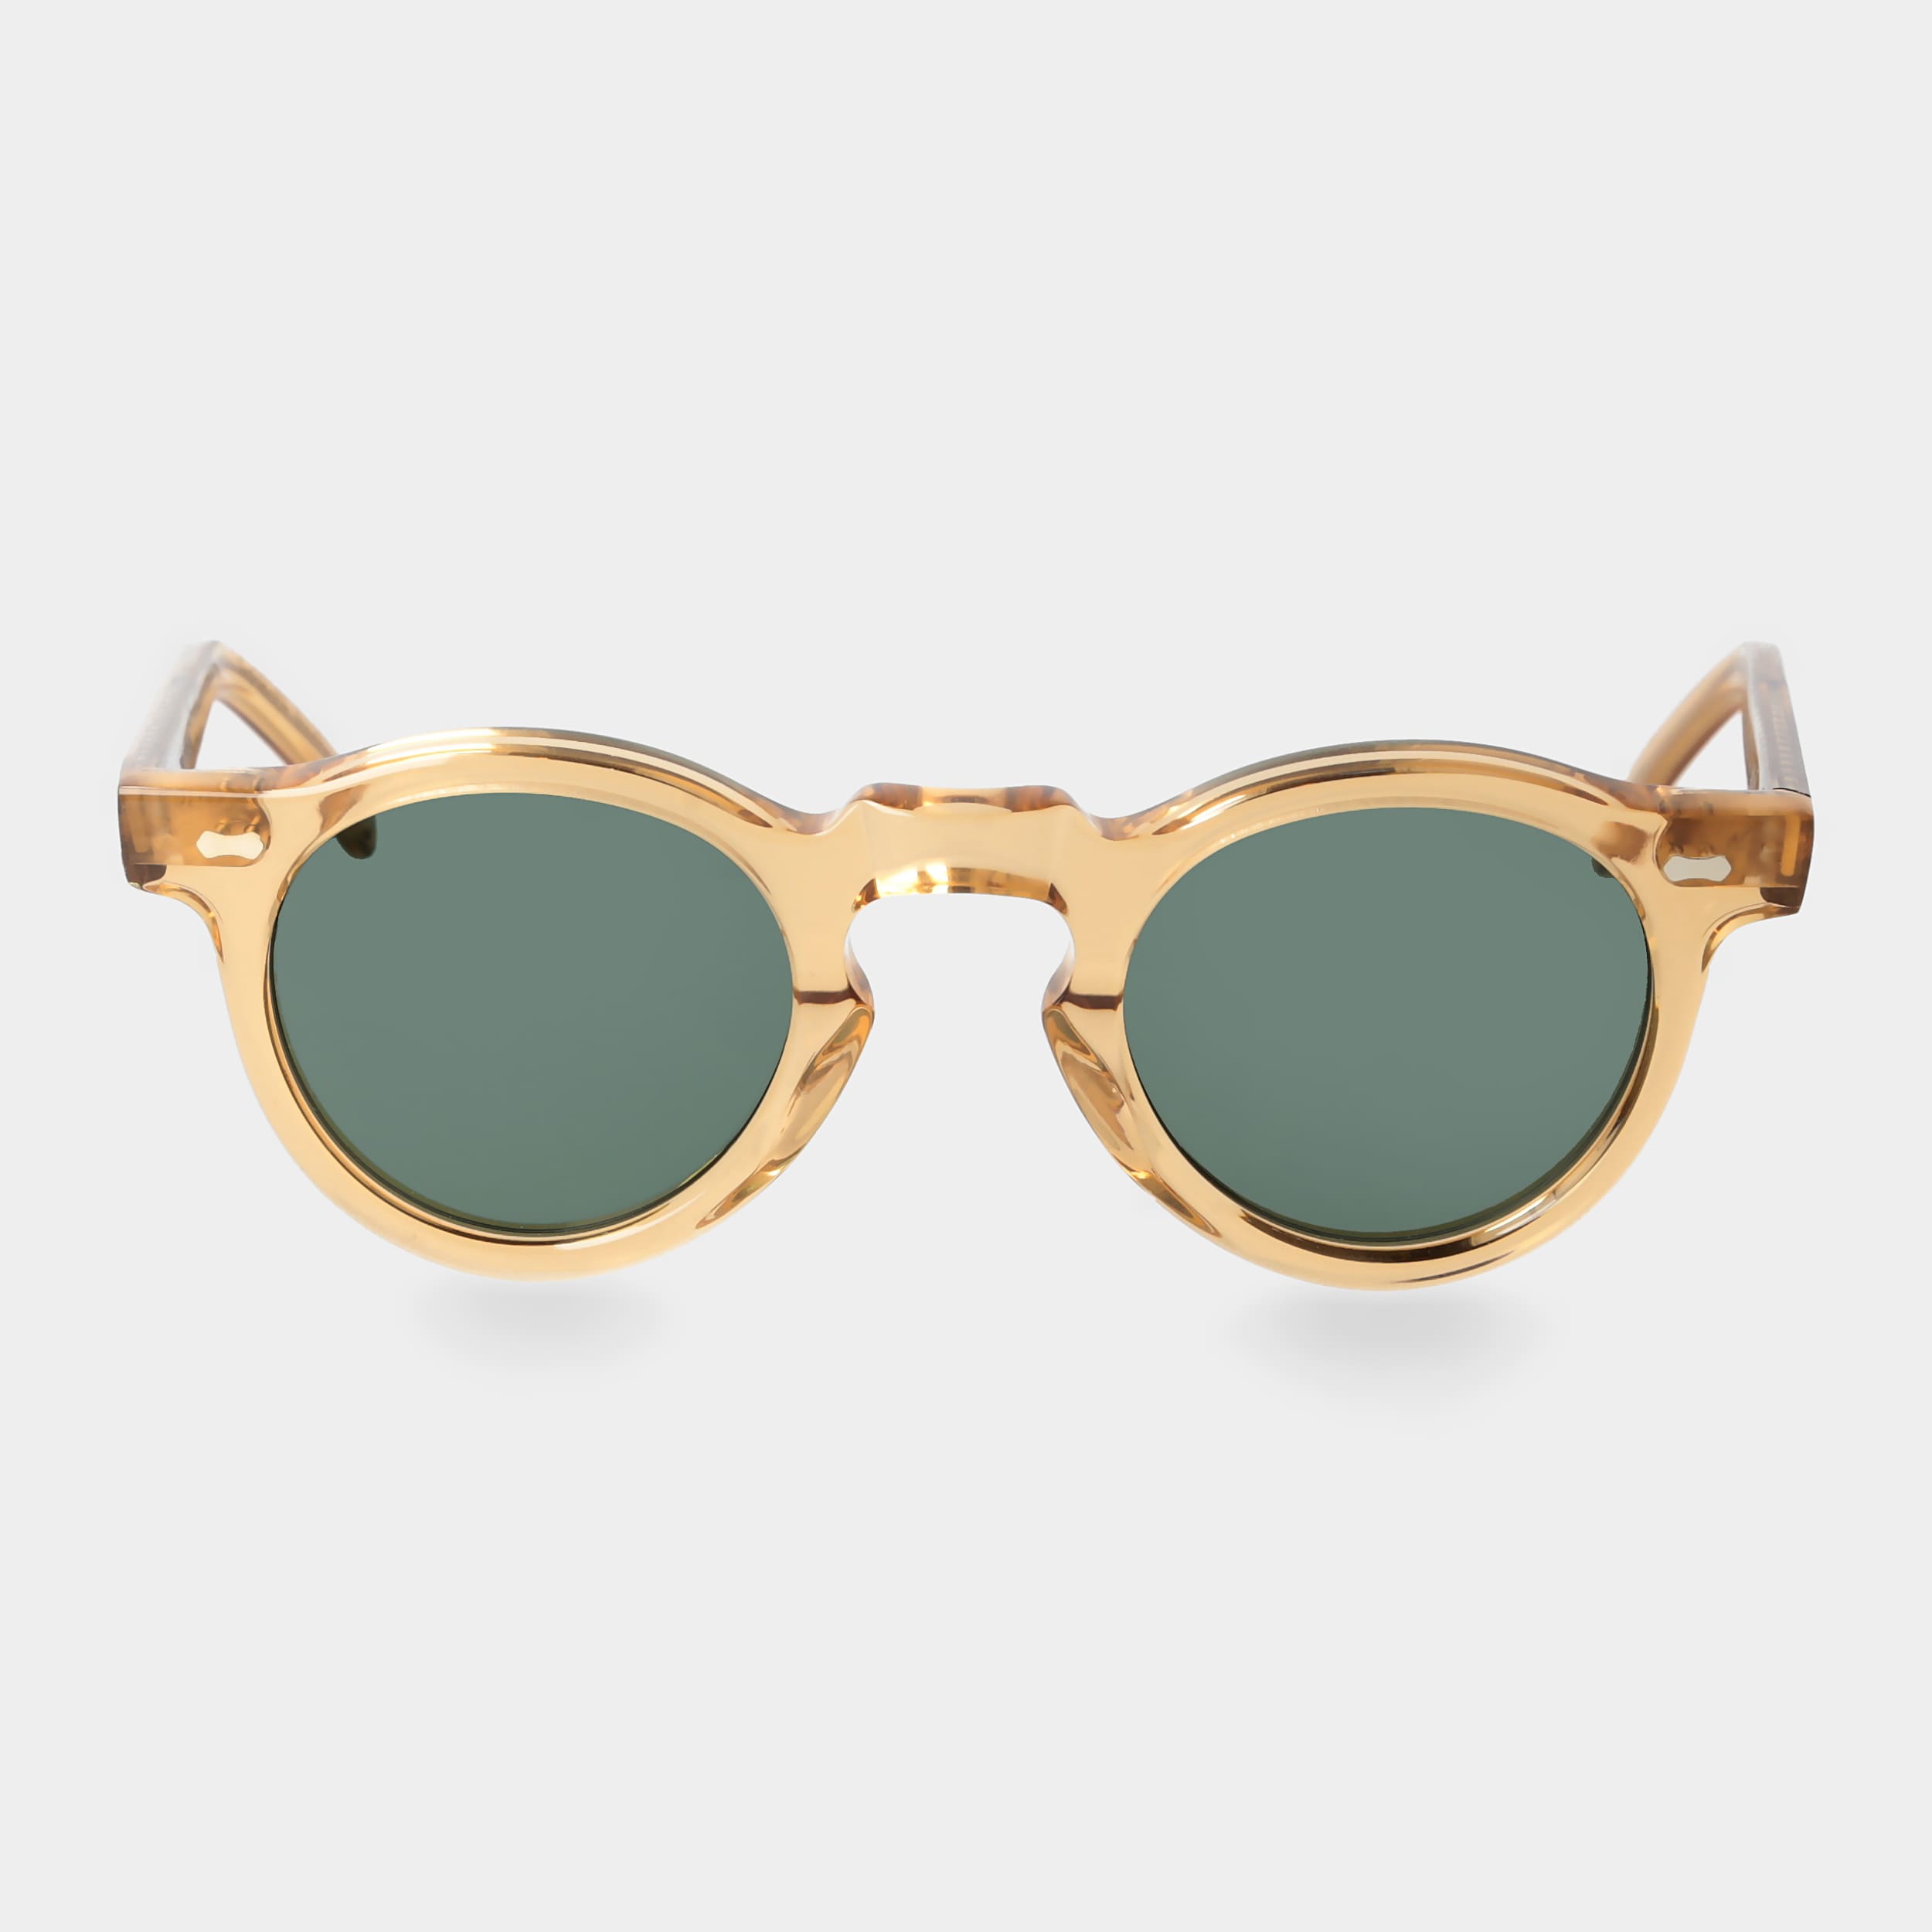 sunglasses-welt-eco-champagne-bottle-green-sustainable-tbd-eyewear-front